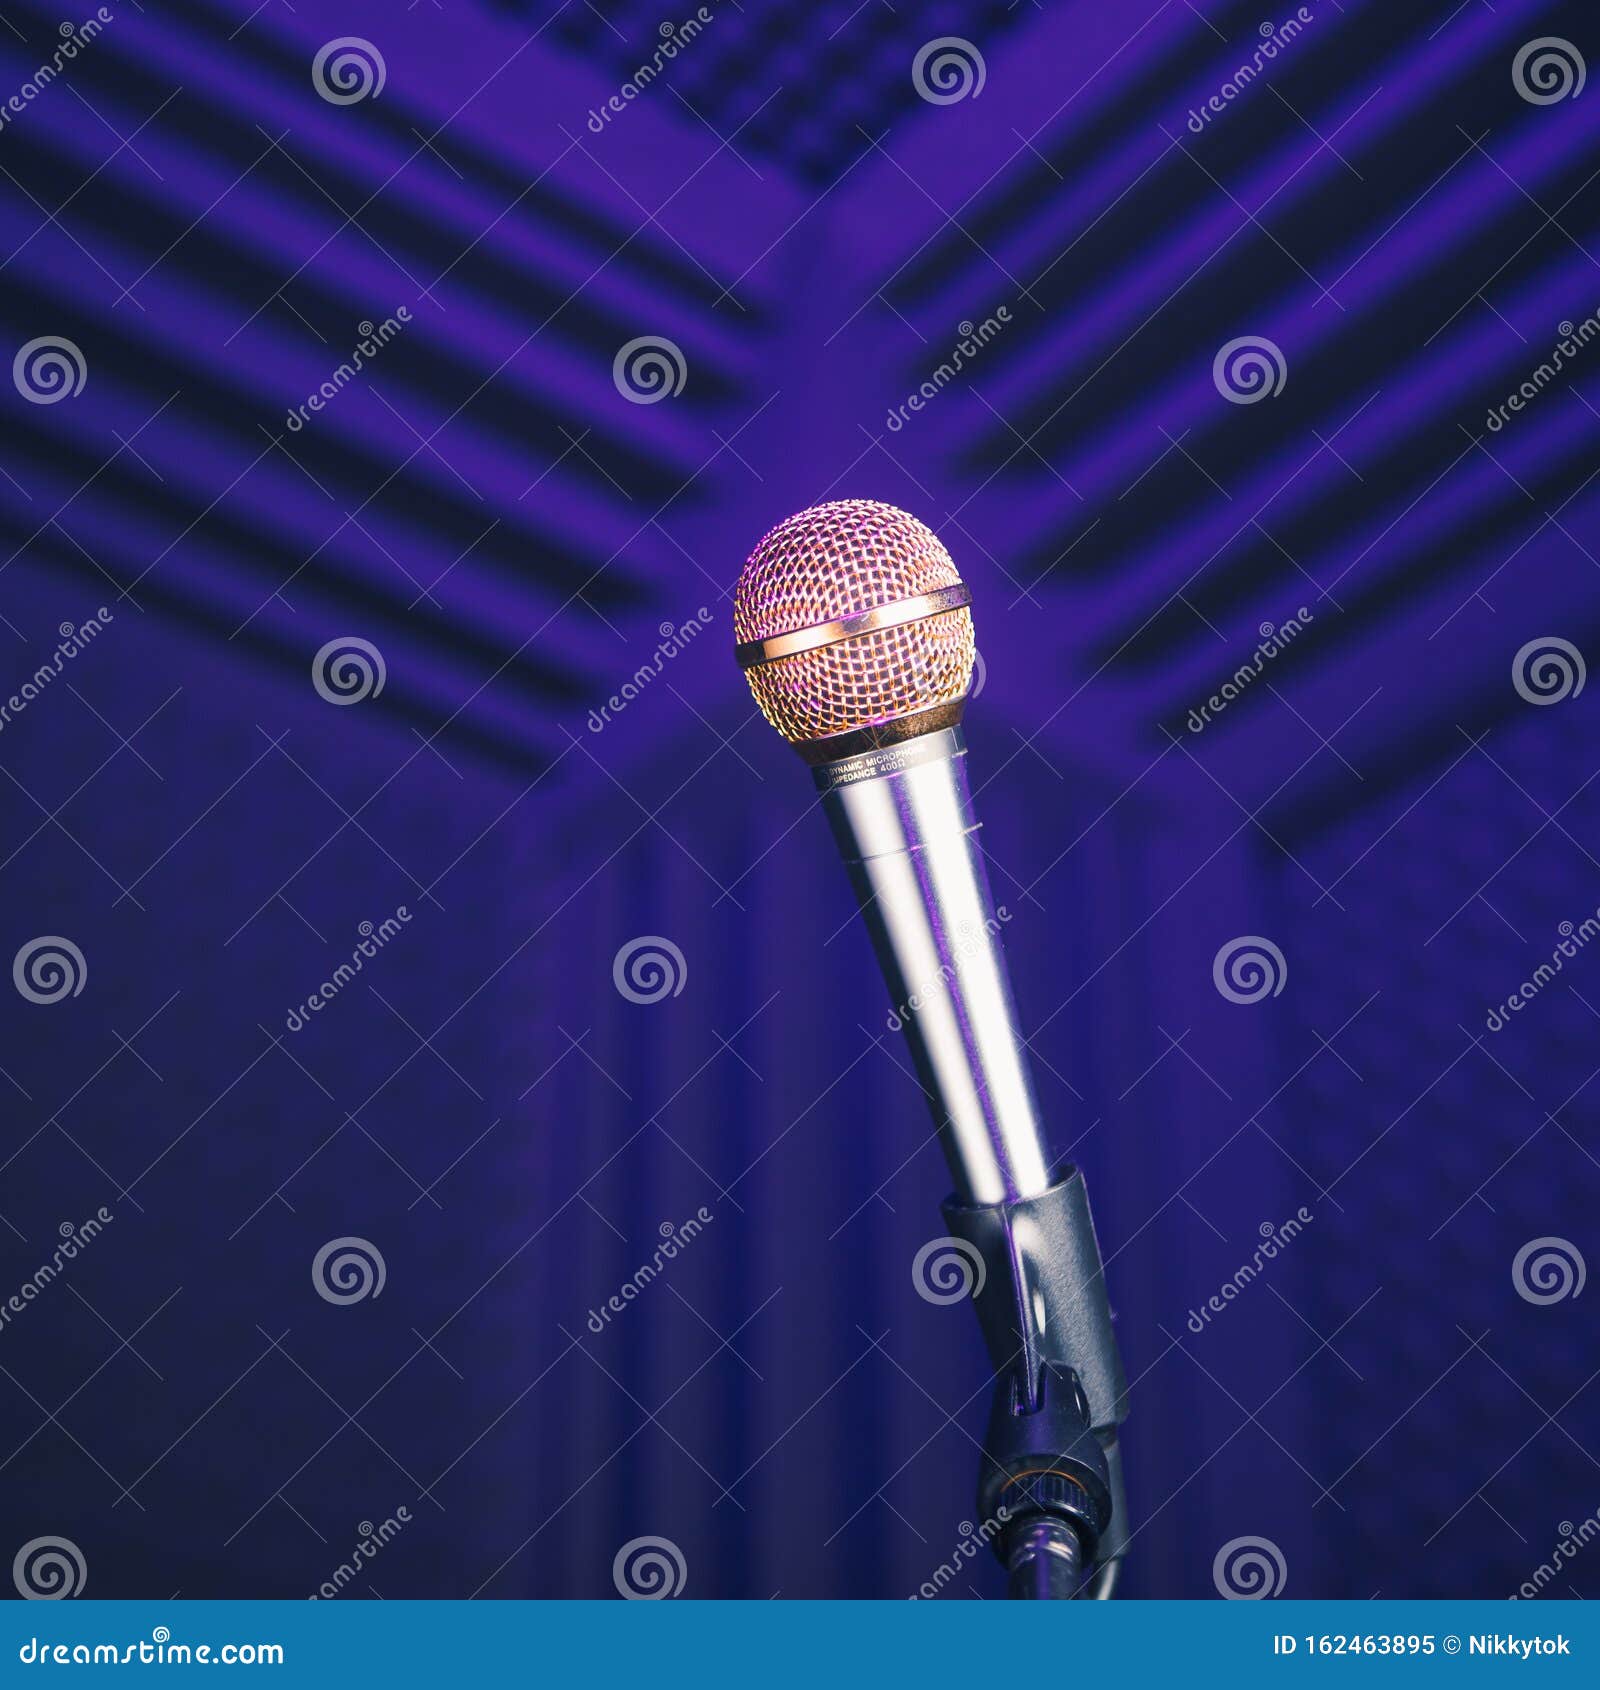 purple sparkly microphone